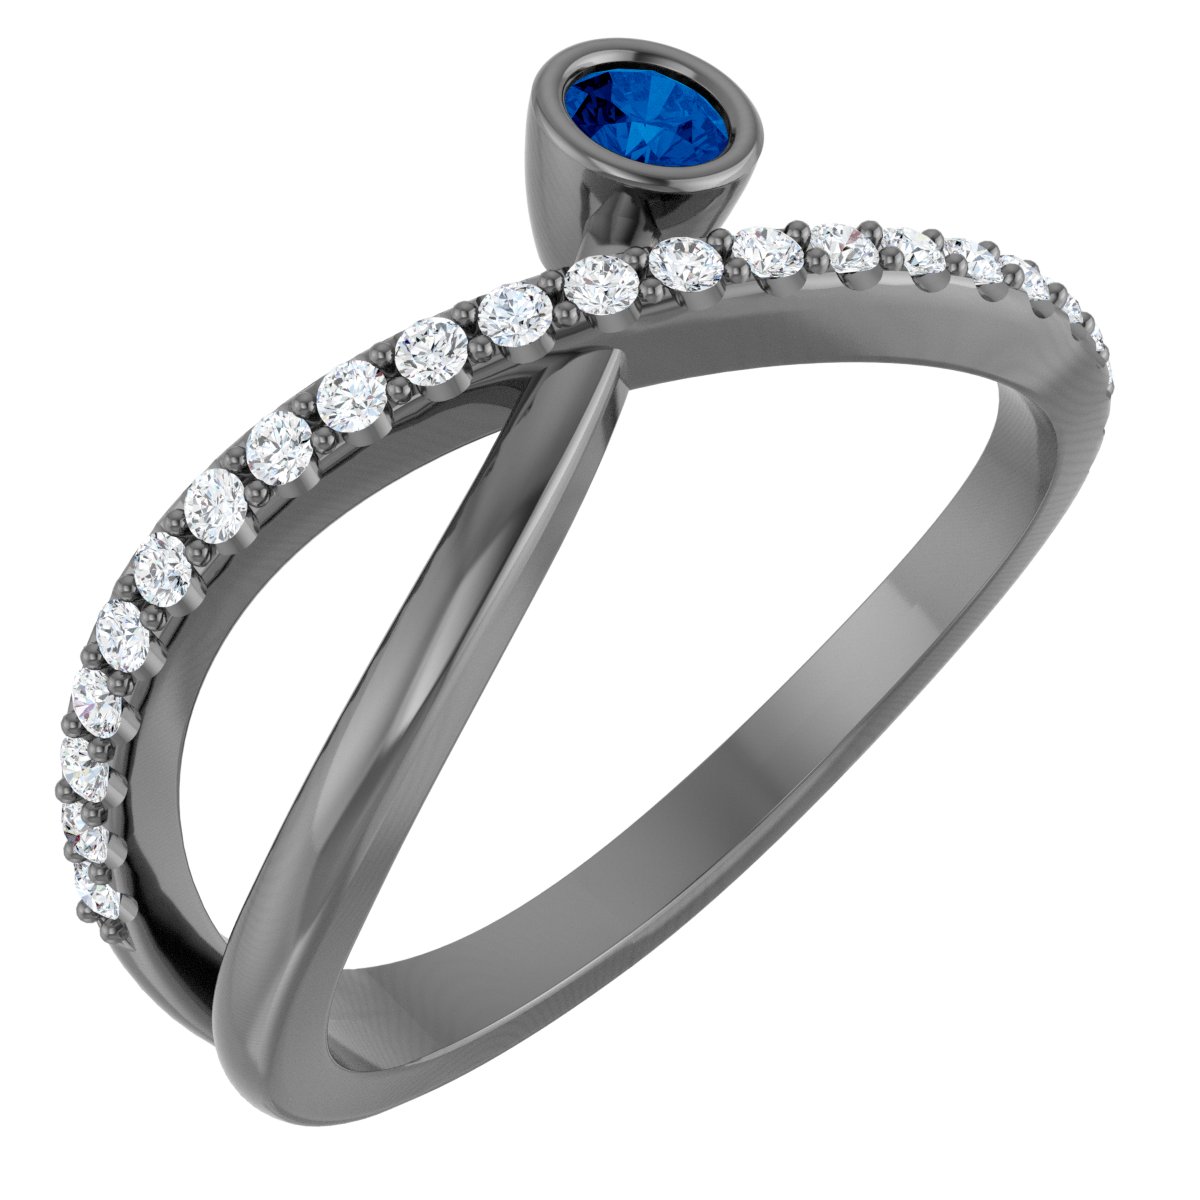 14K Yellow Natural Blue Sapphire & 1/5 CTW Natural Diamond Ring